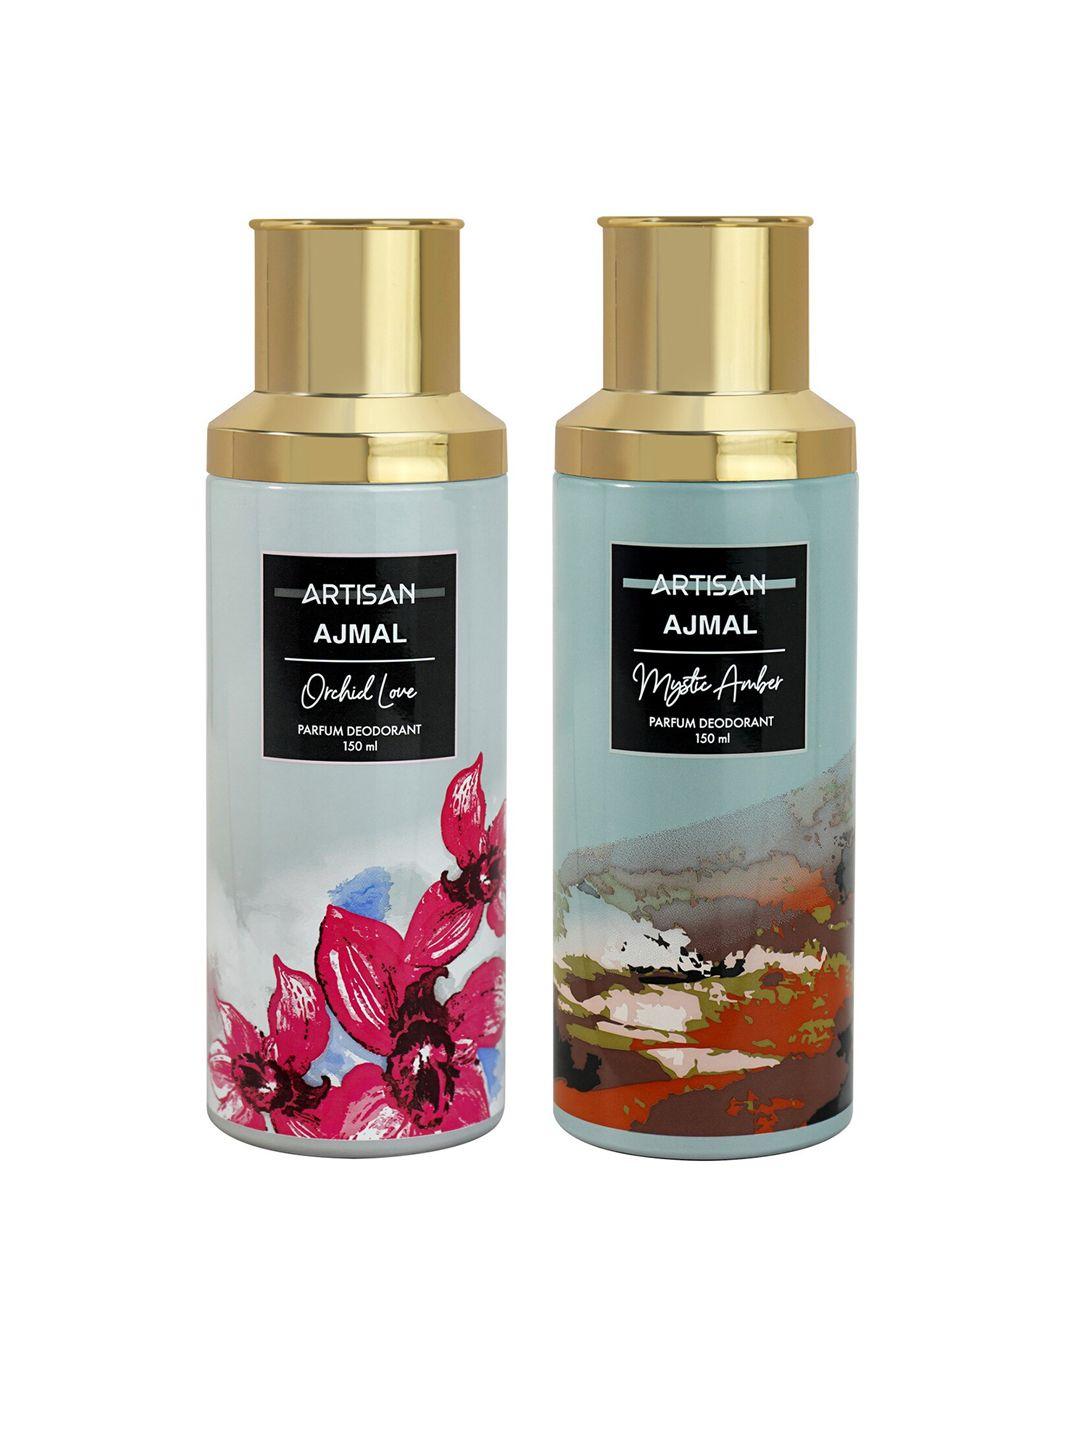 ajmal set of 2 artisan deodorant - orchid love & mystic amber - 150ml each